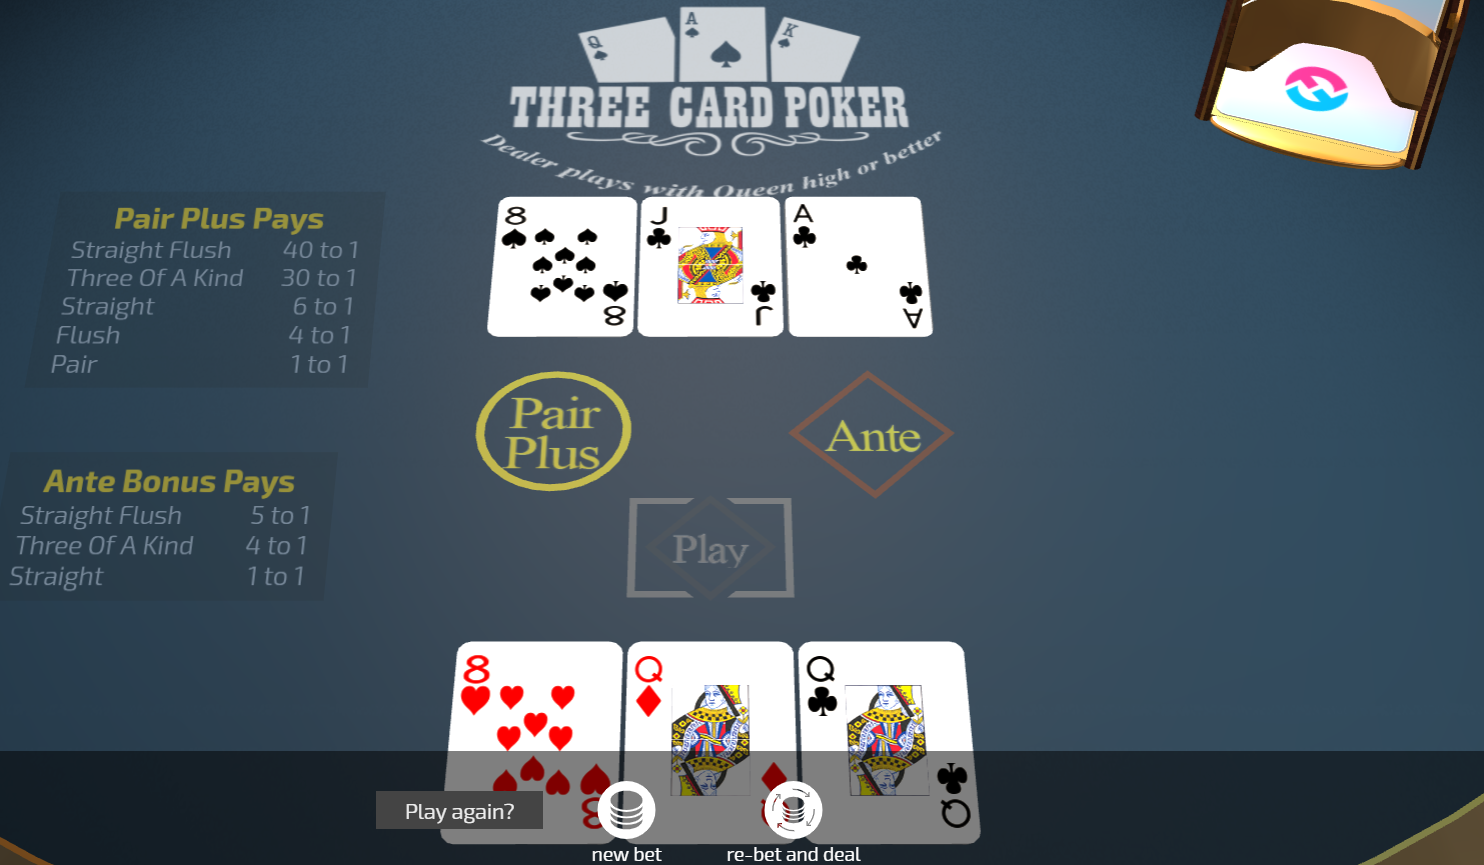 3 card poker casino odds